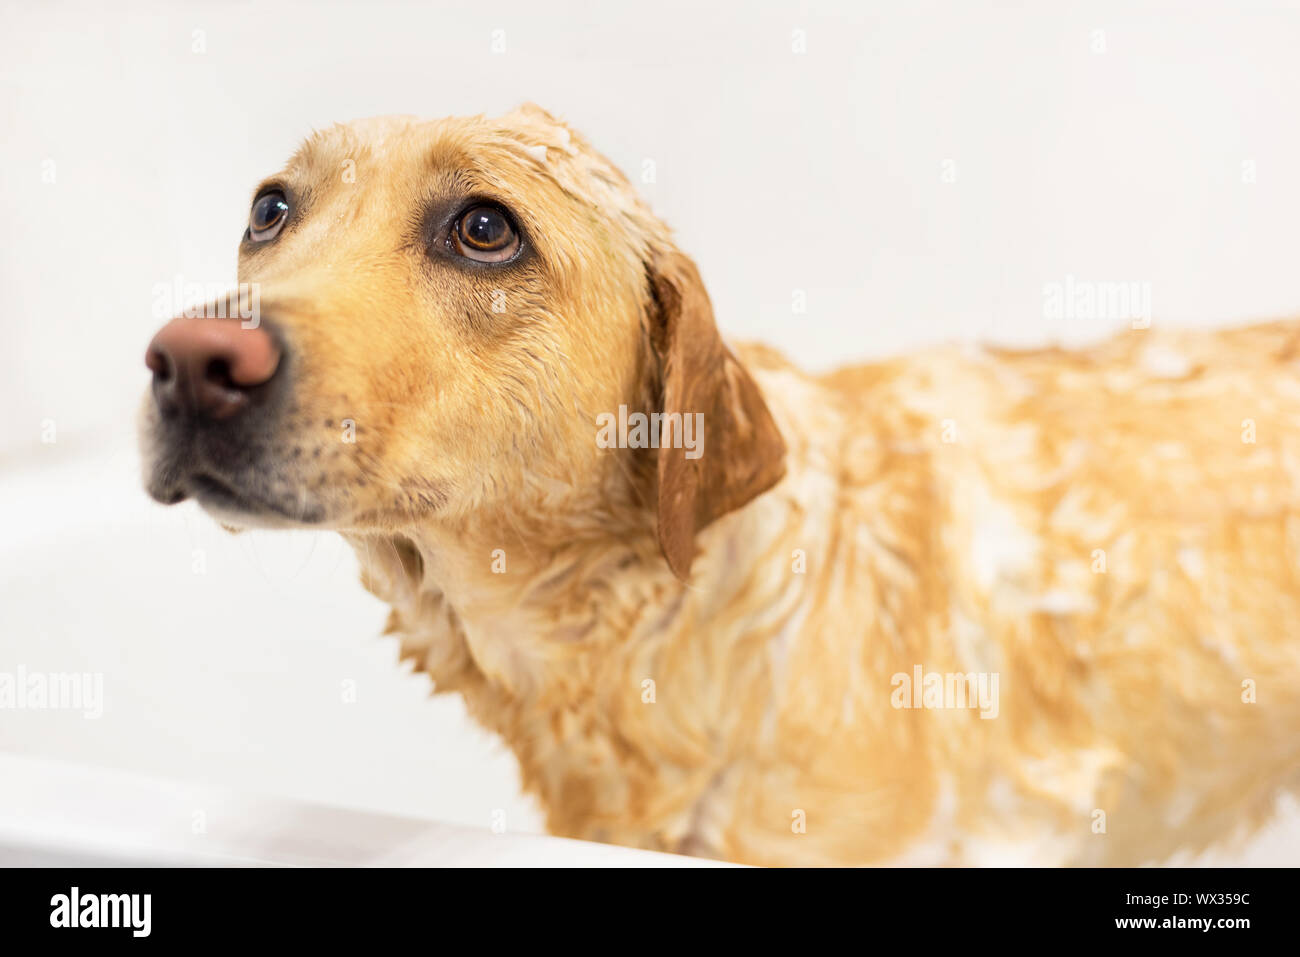 Golden retriever afraid of taking a bath. Sad expression. Stock Photo